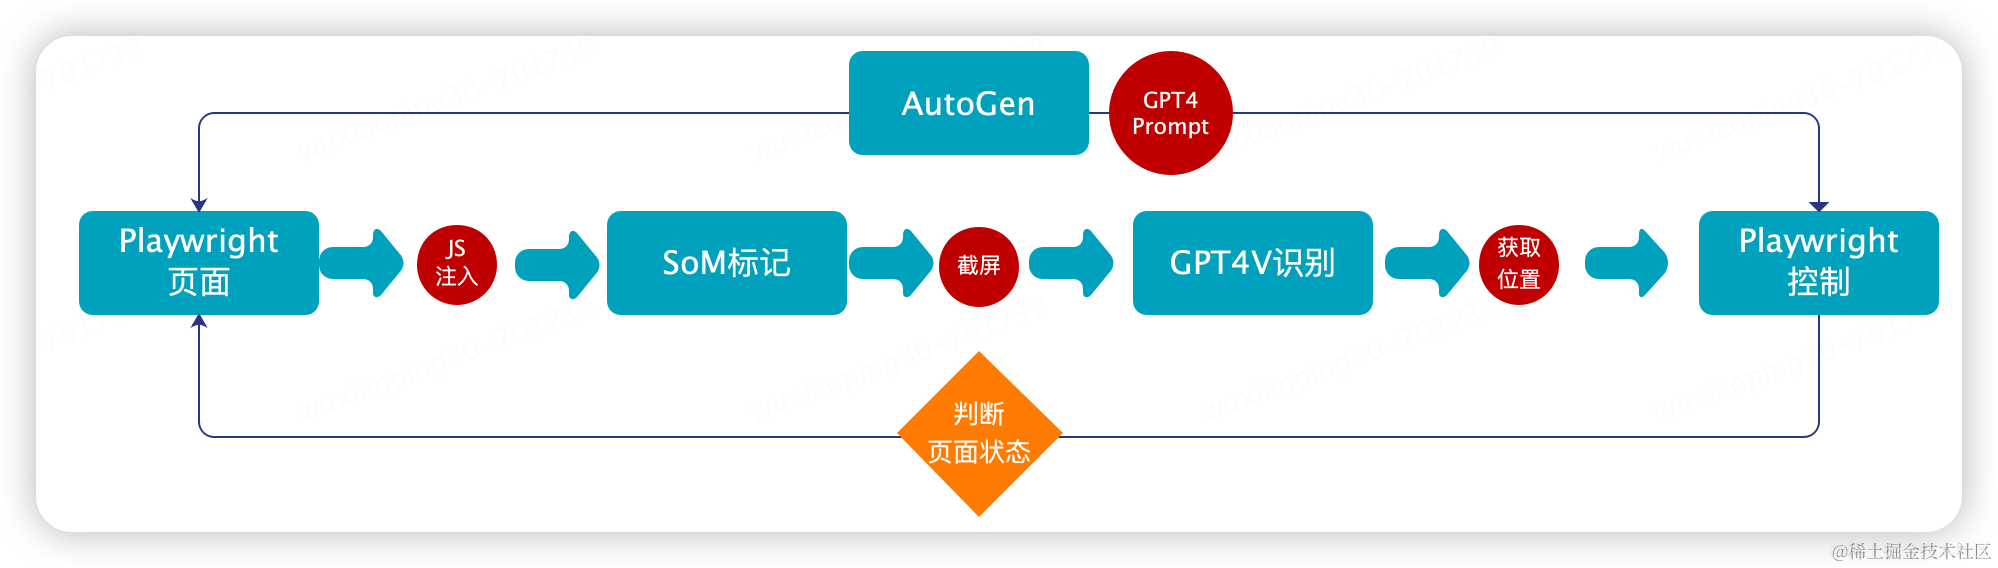 使用 GPT4V+AI Agent 做自动 UI 测试的探索